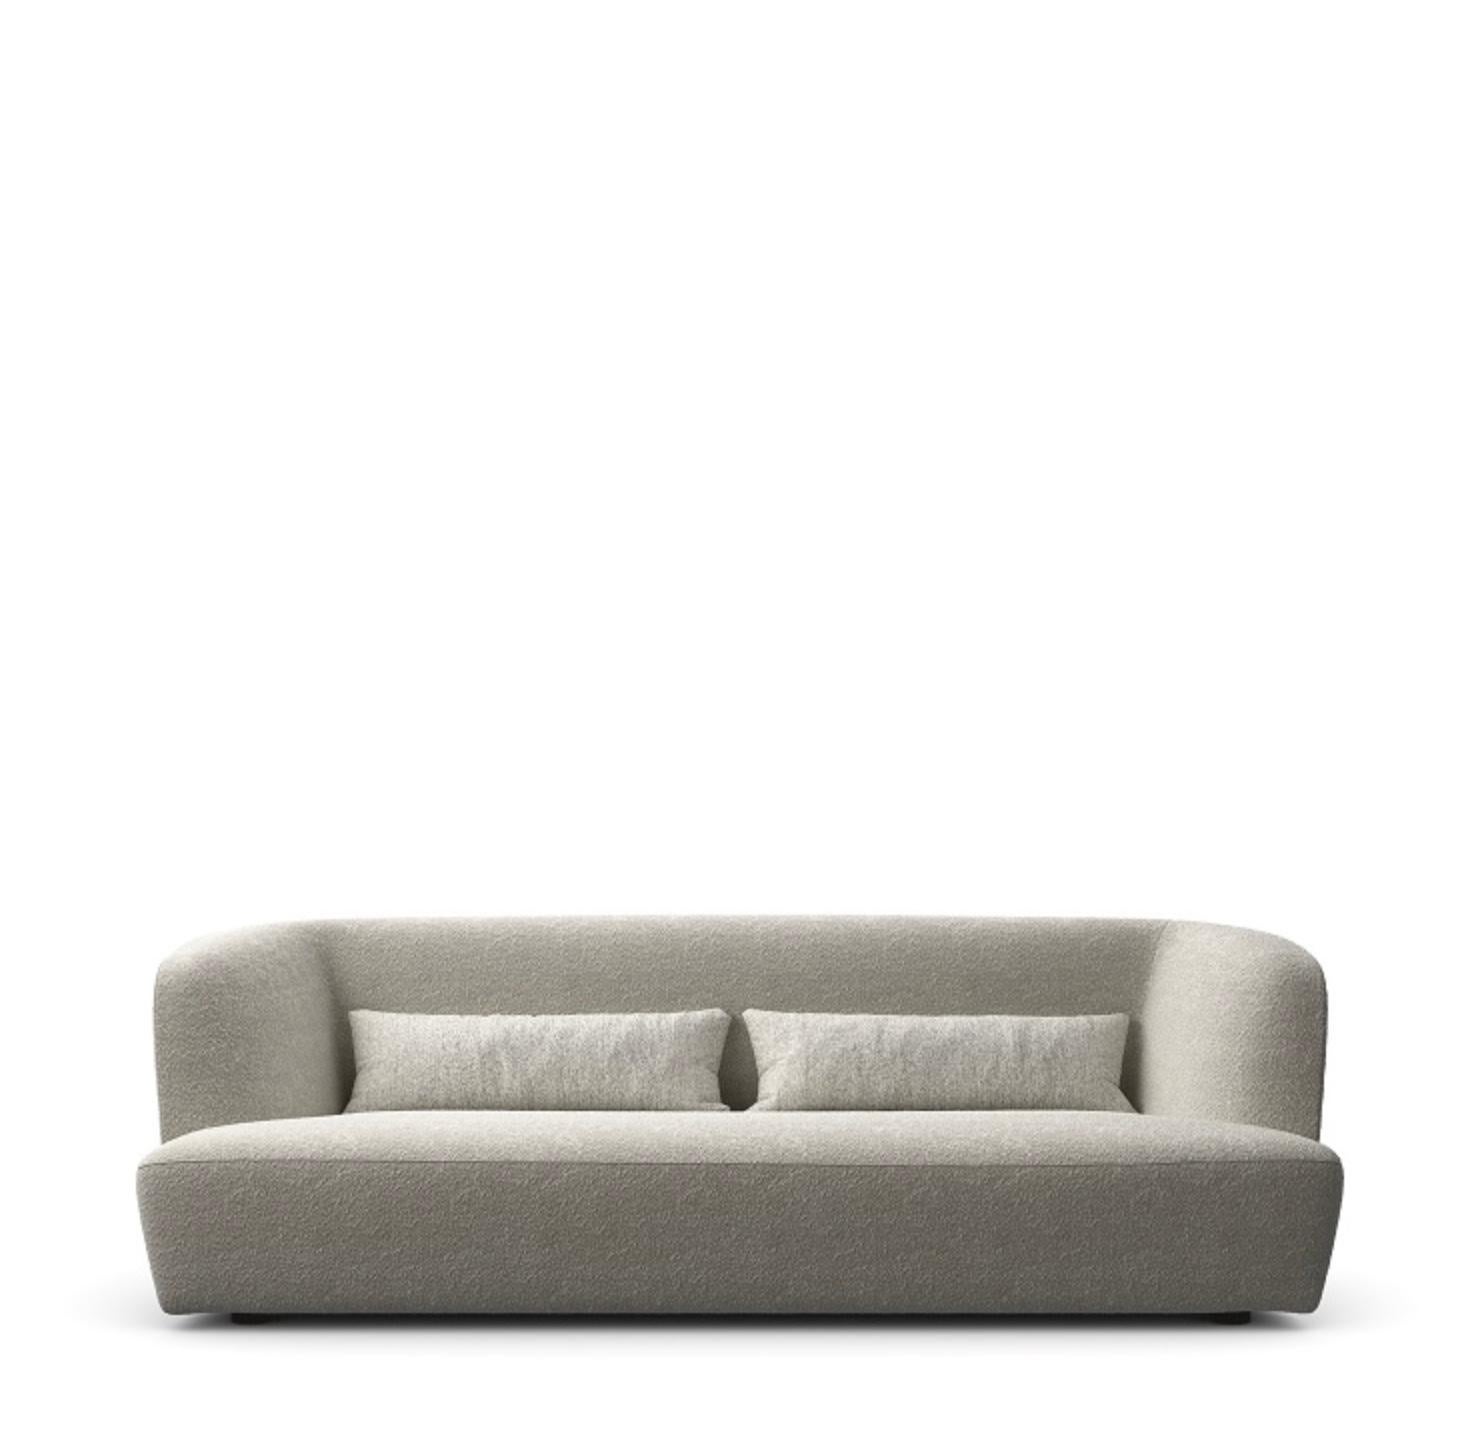 Lievore + Altherr Désile Park 'Davos' Sofa 175 for Verzelloni, Italy For Sale 2